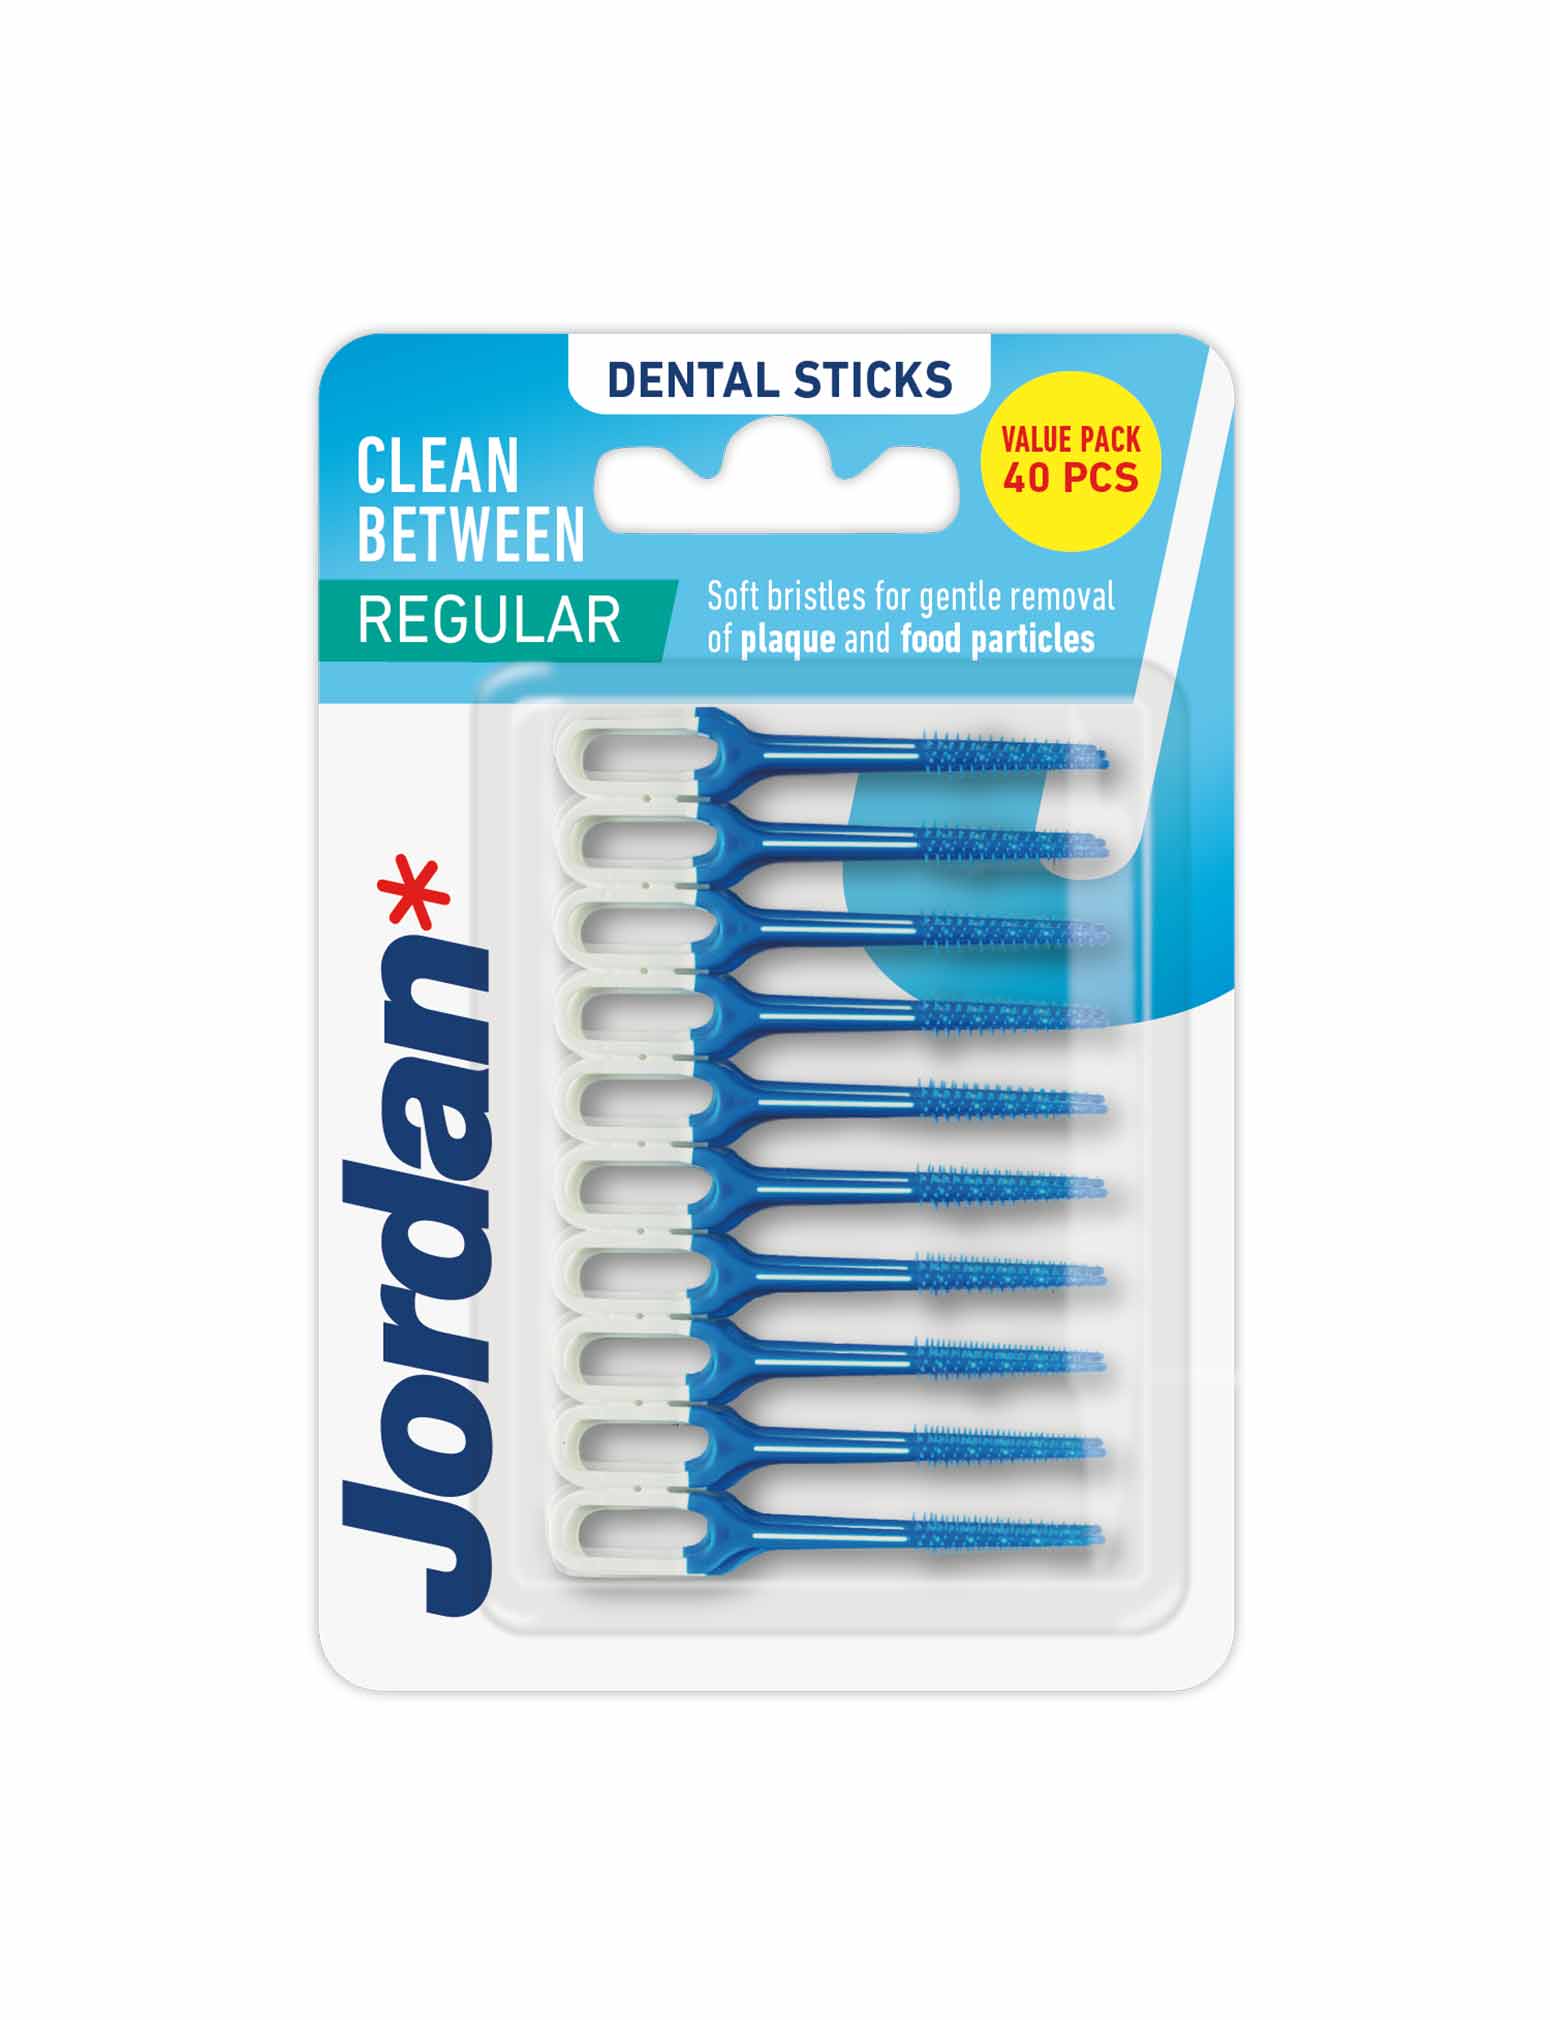 Between Sticks Oral Care